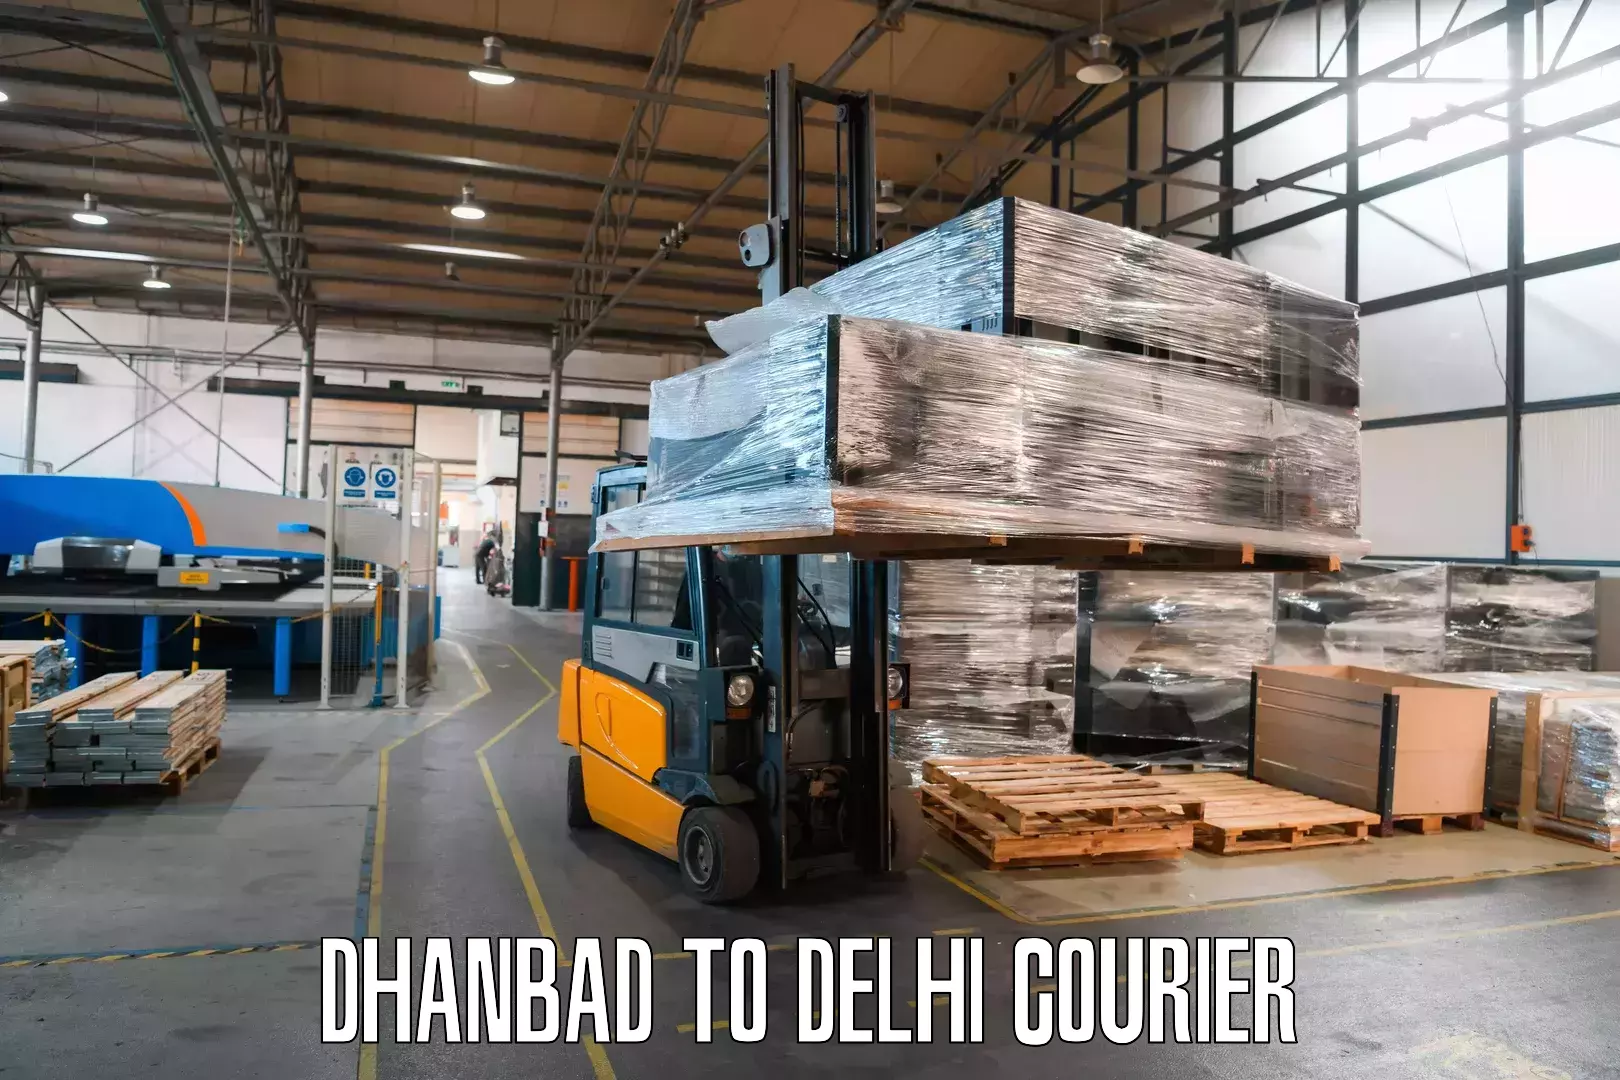 Express postal services Dhanbad to Delhi